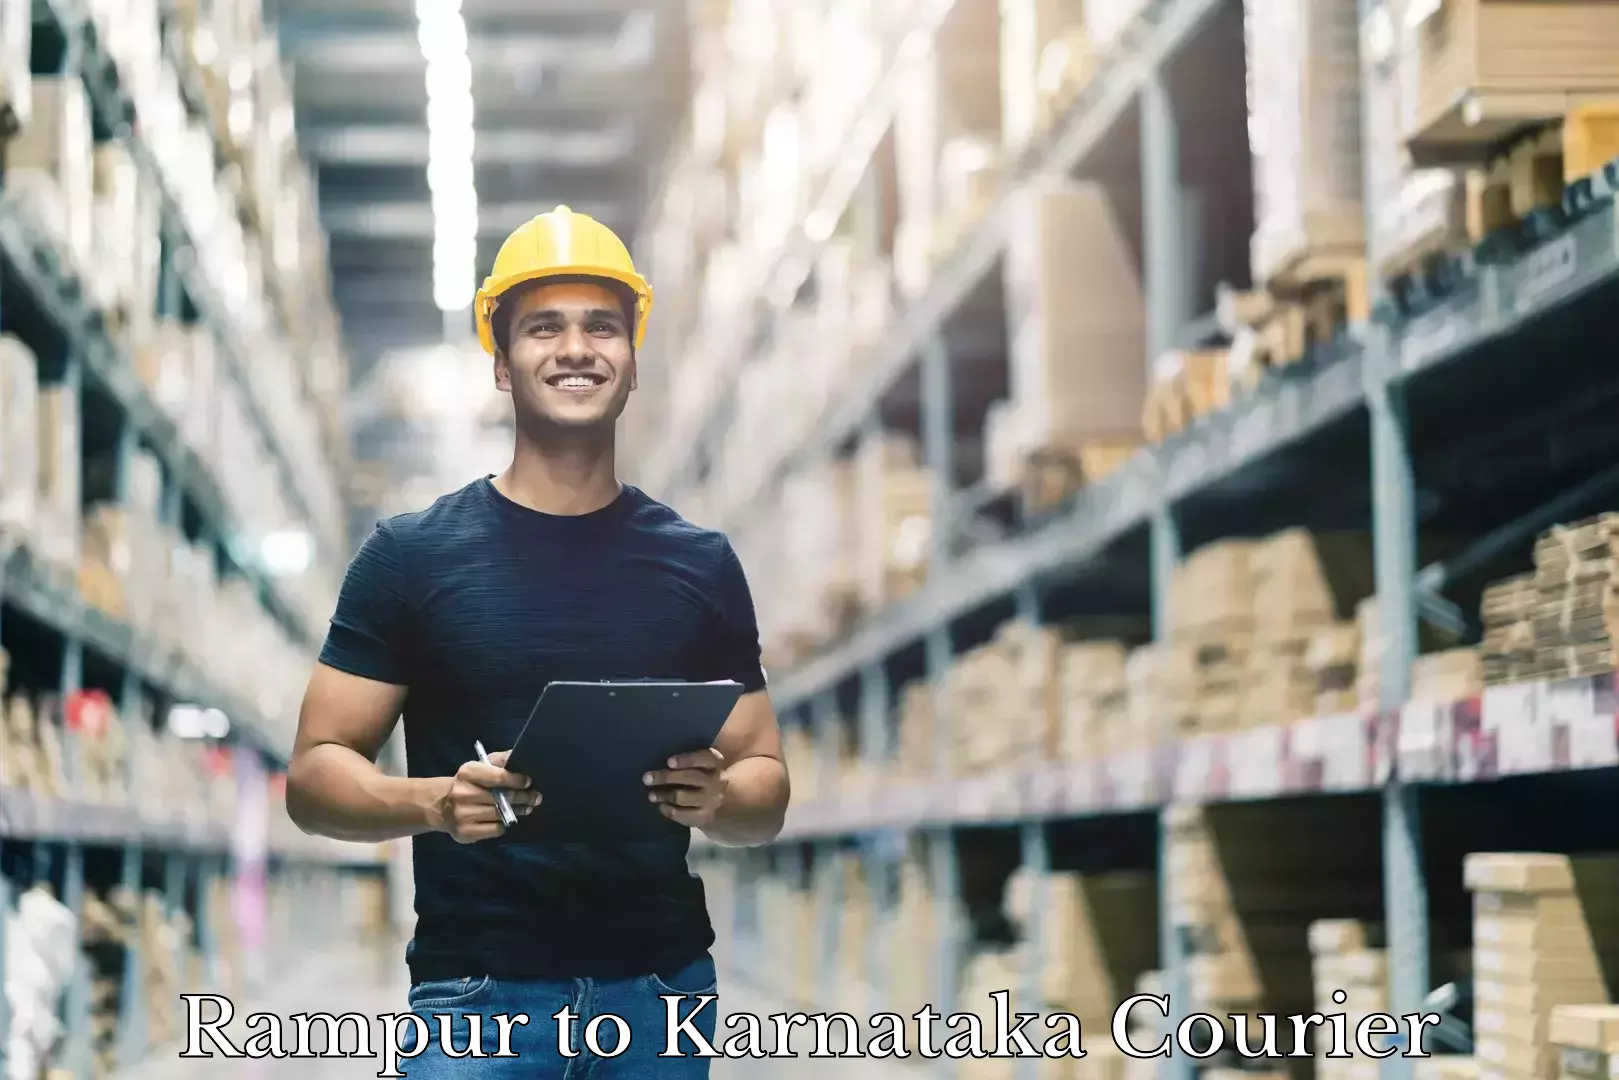 Specialized moving company Rampur to Karnataka